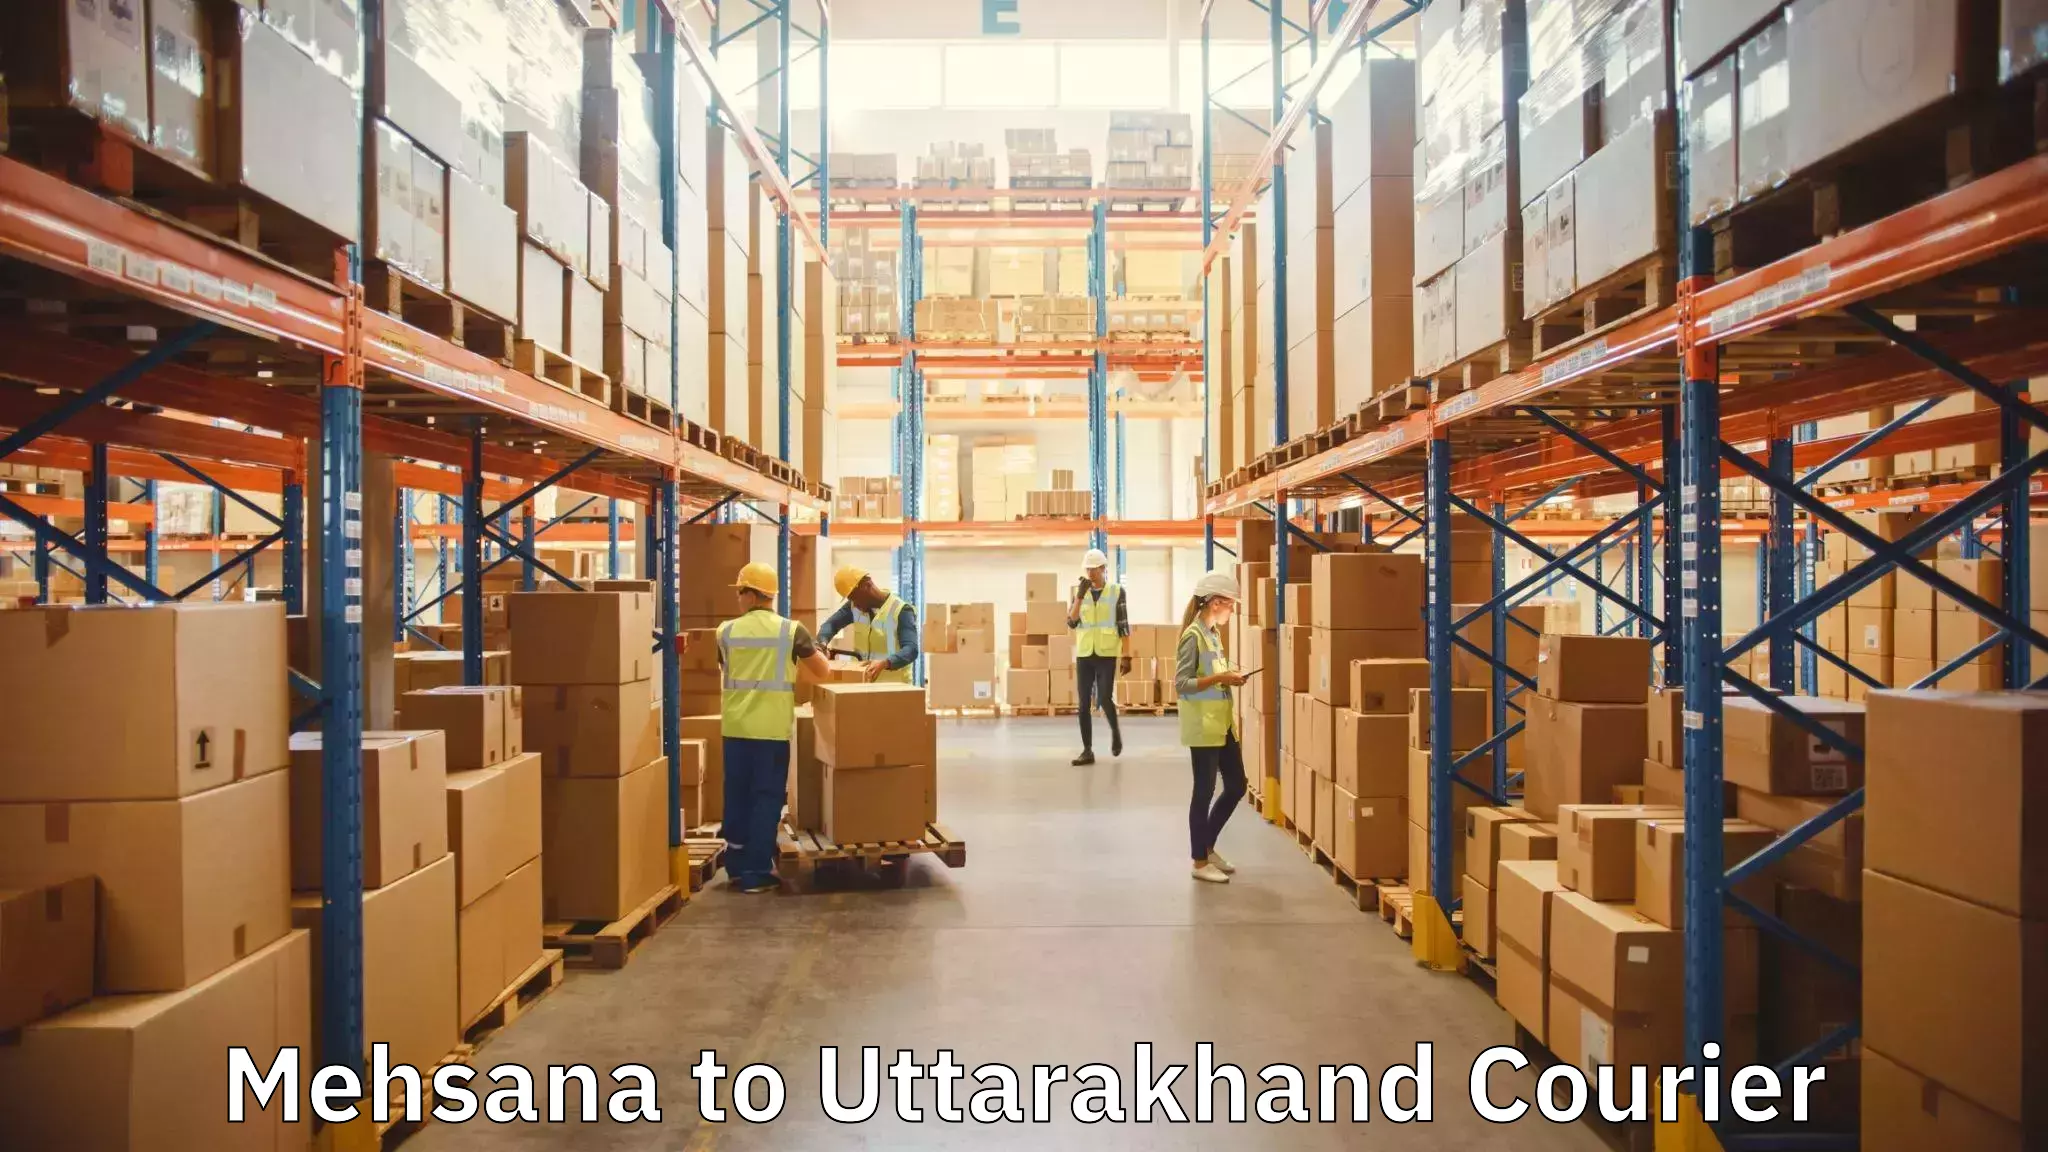 Professional moving company Mehsana to Uttarakhand